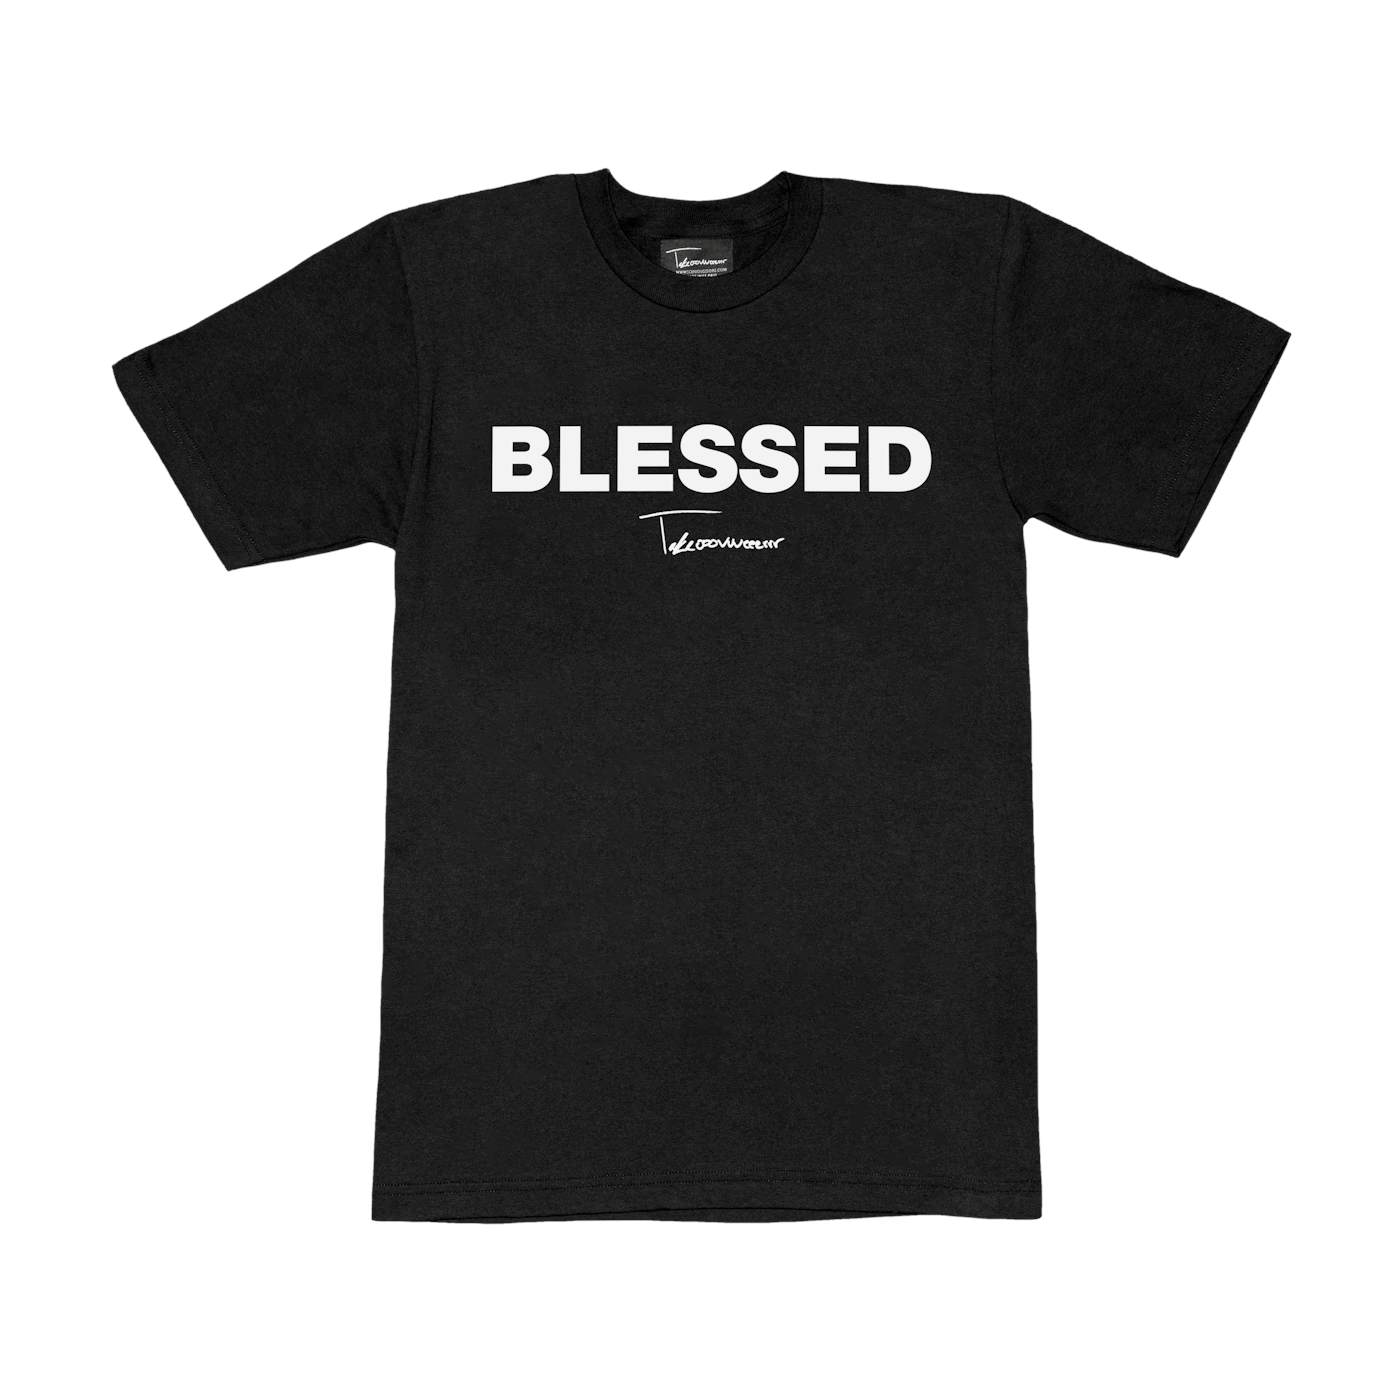 Taylor J Takeover Blessed T-Shirt (Black/White)